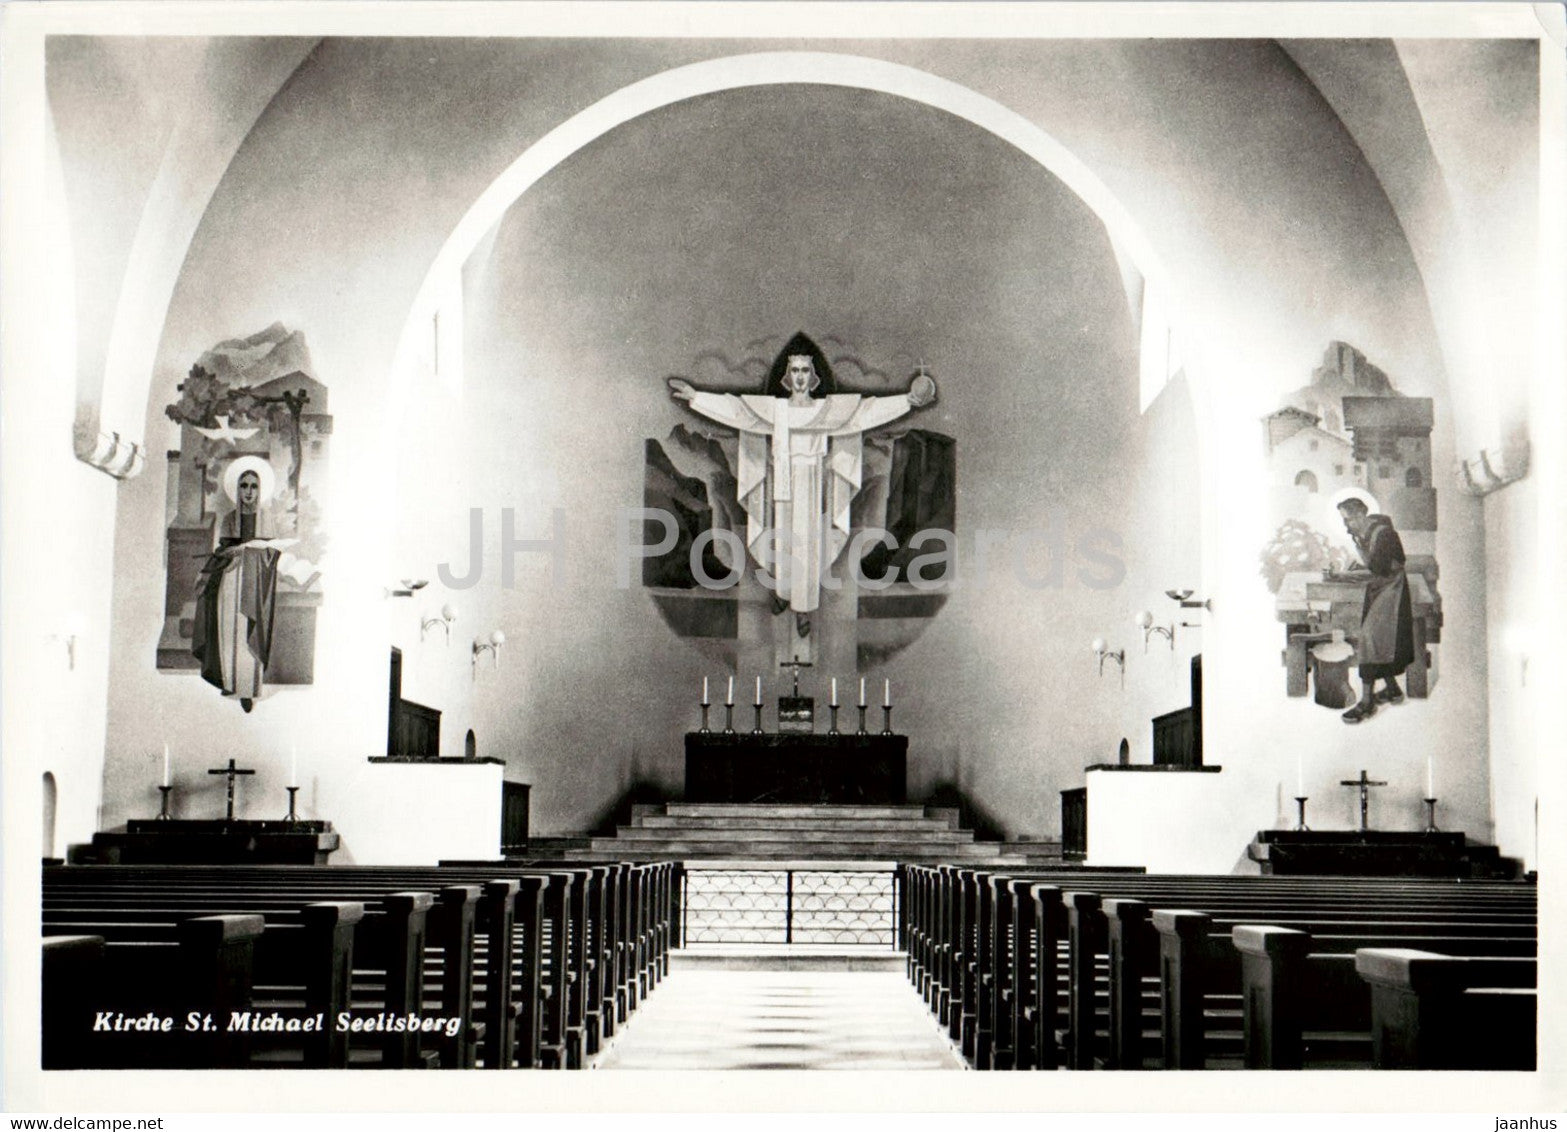 Kirche St Michael Seelisberg - church - old postcard - Switzerland - unused - JH Postcards